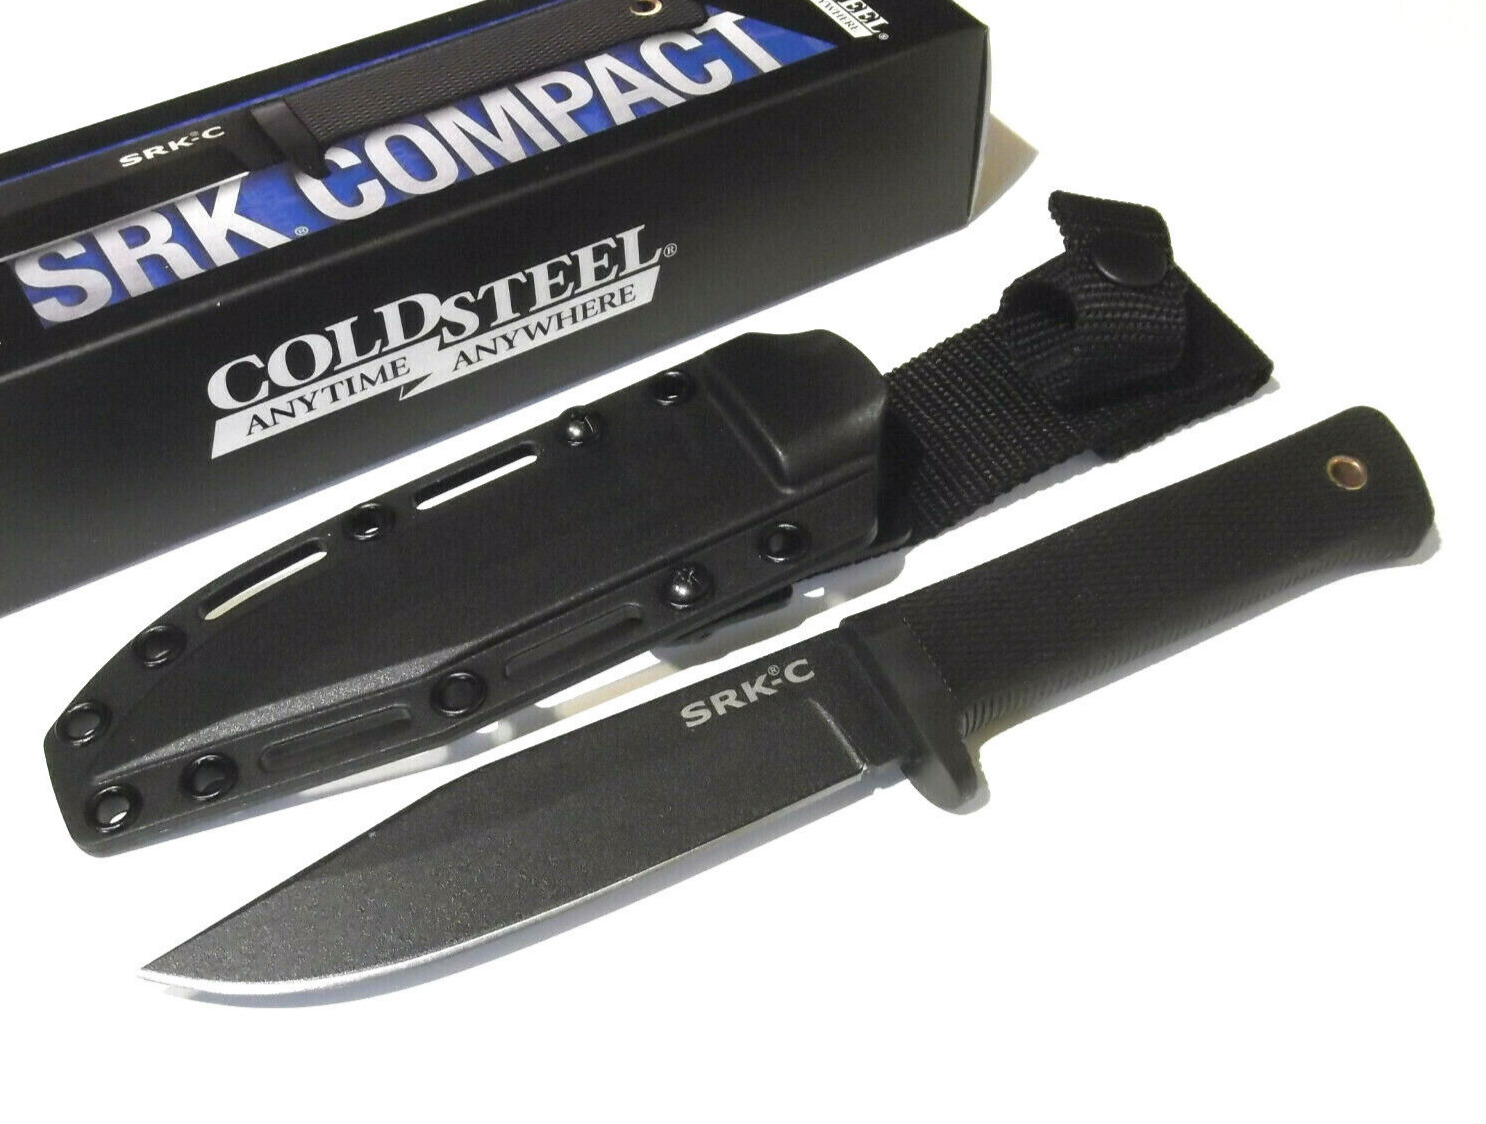 COLD STEEL 49LCKD SRK-C COMPACT Survival Rescue SK-5 carbon knife 9 1/2\